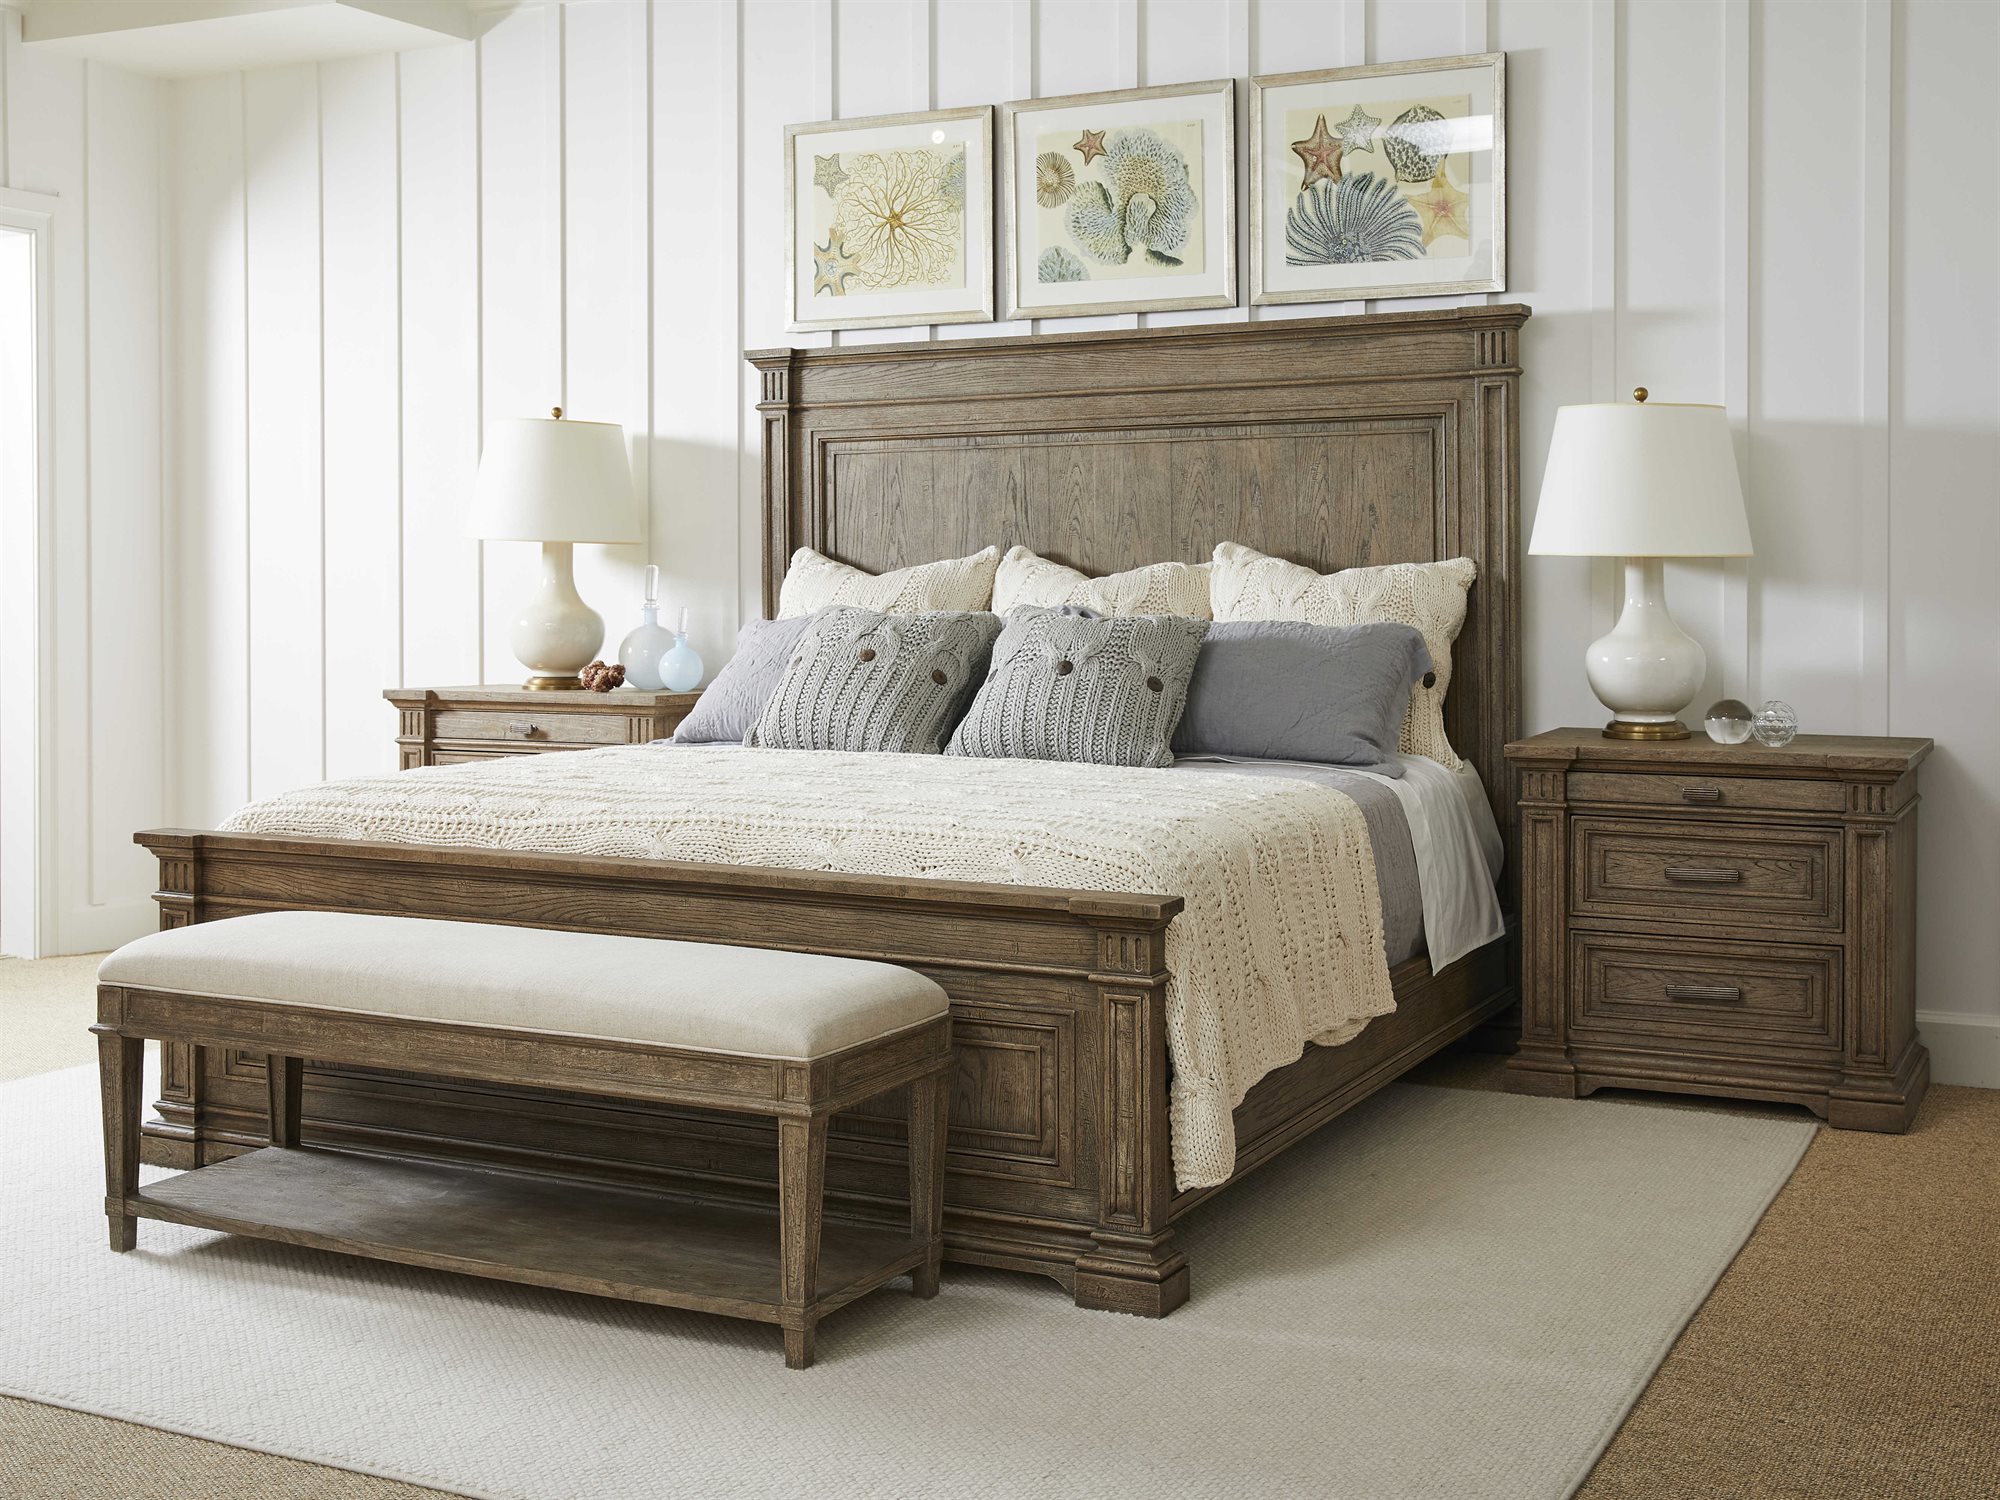 stanley bedroom furniture chest 547-13-12